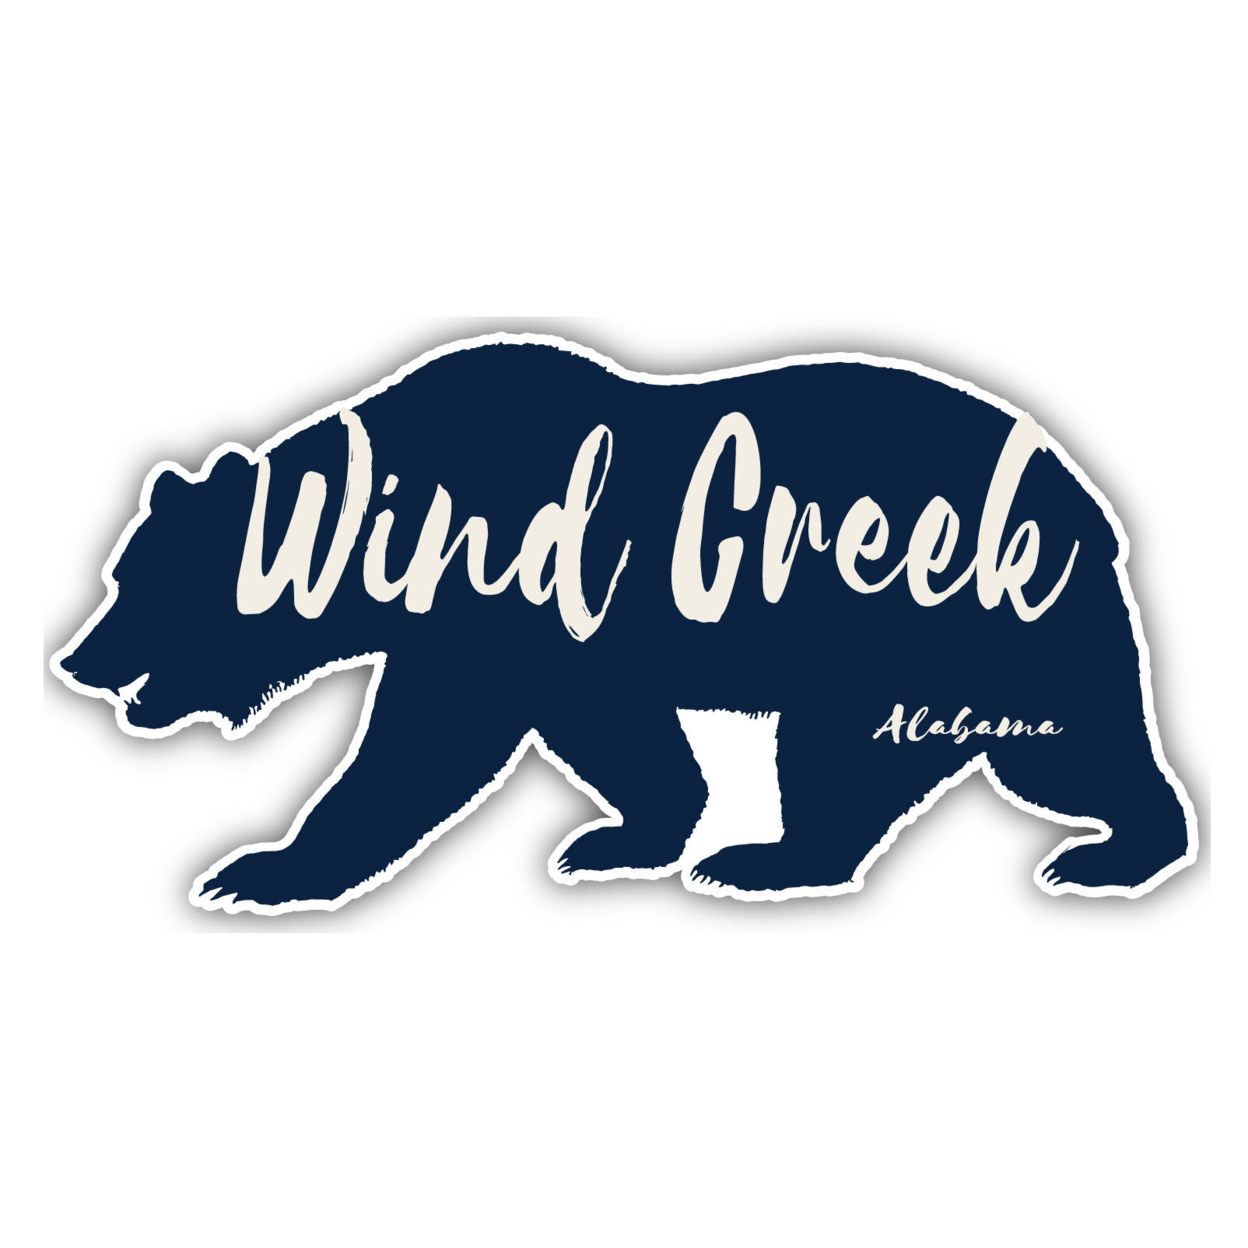 Wind Creek Alabama Souvenir Decorative Stickers (Choose Theme And Size) - Single Unit, 2-Inch, Bear